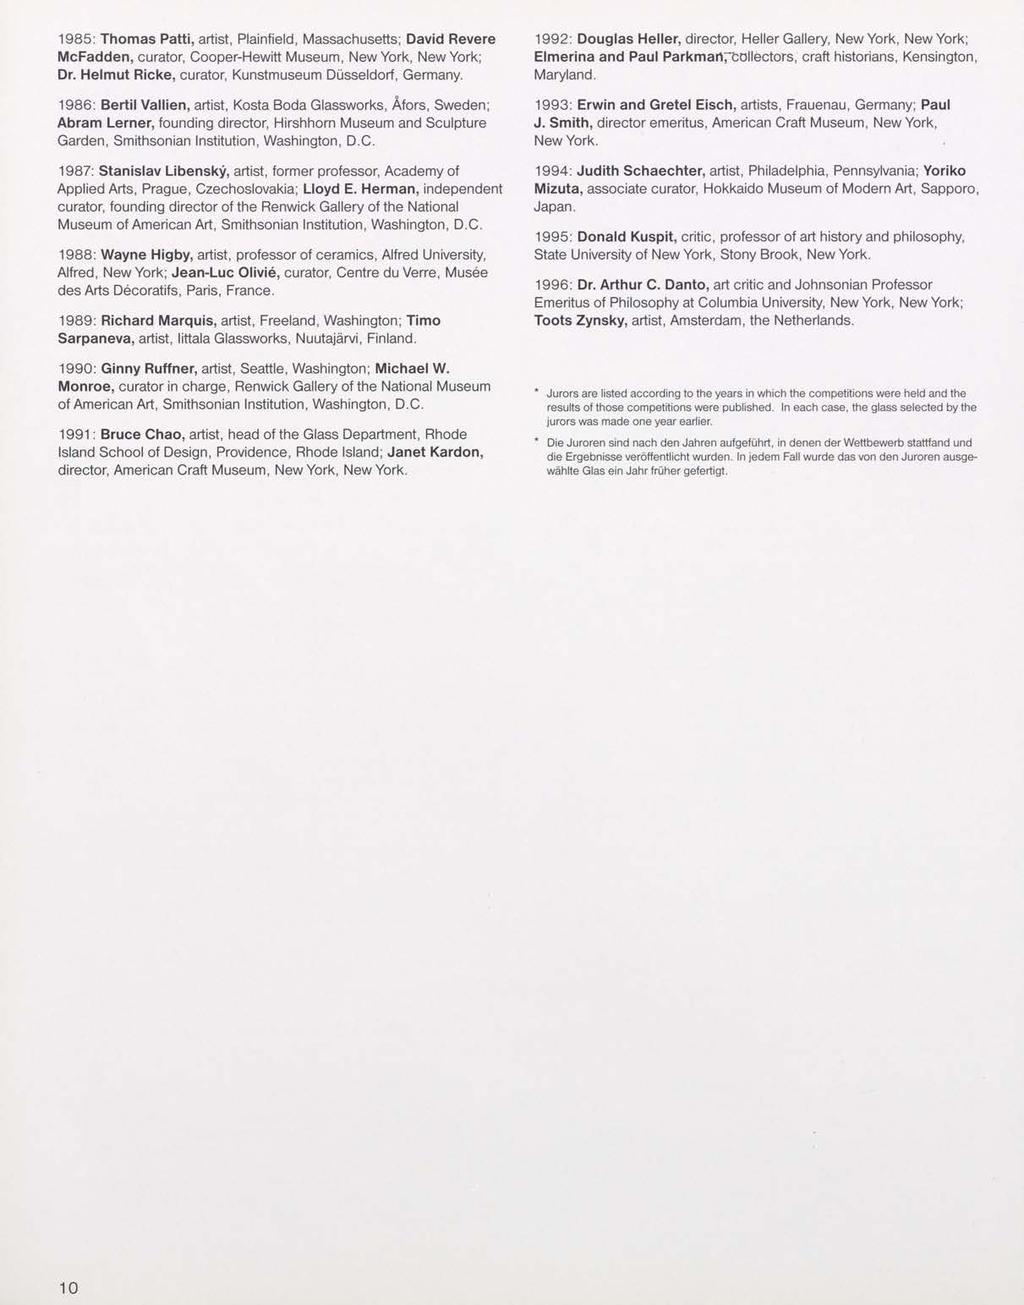 1985: Thomas Patti, artist, Plainfield, Massachusetts; David Revere McFadden, curator, Cooper-Hewitt Museum, New York, New York; Dr. Helmut Ricke, curator, Kunstmuseum Dusseldorf, Germany.